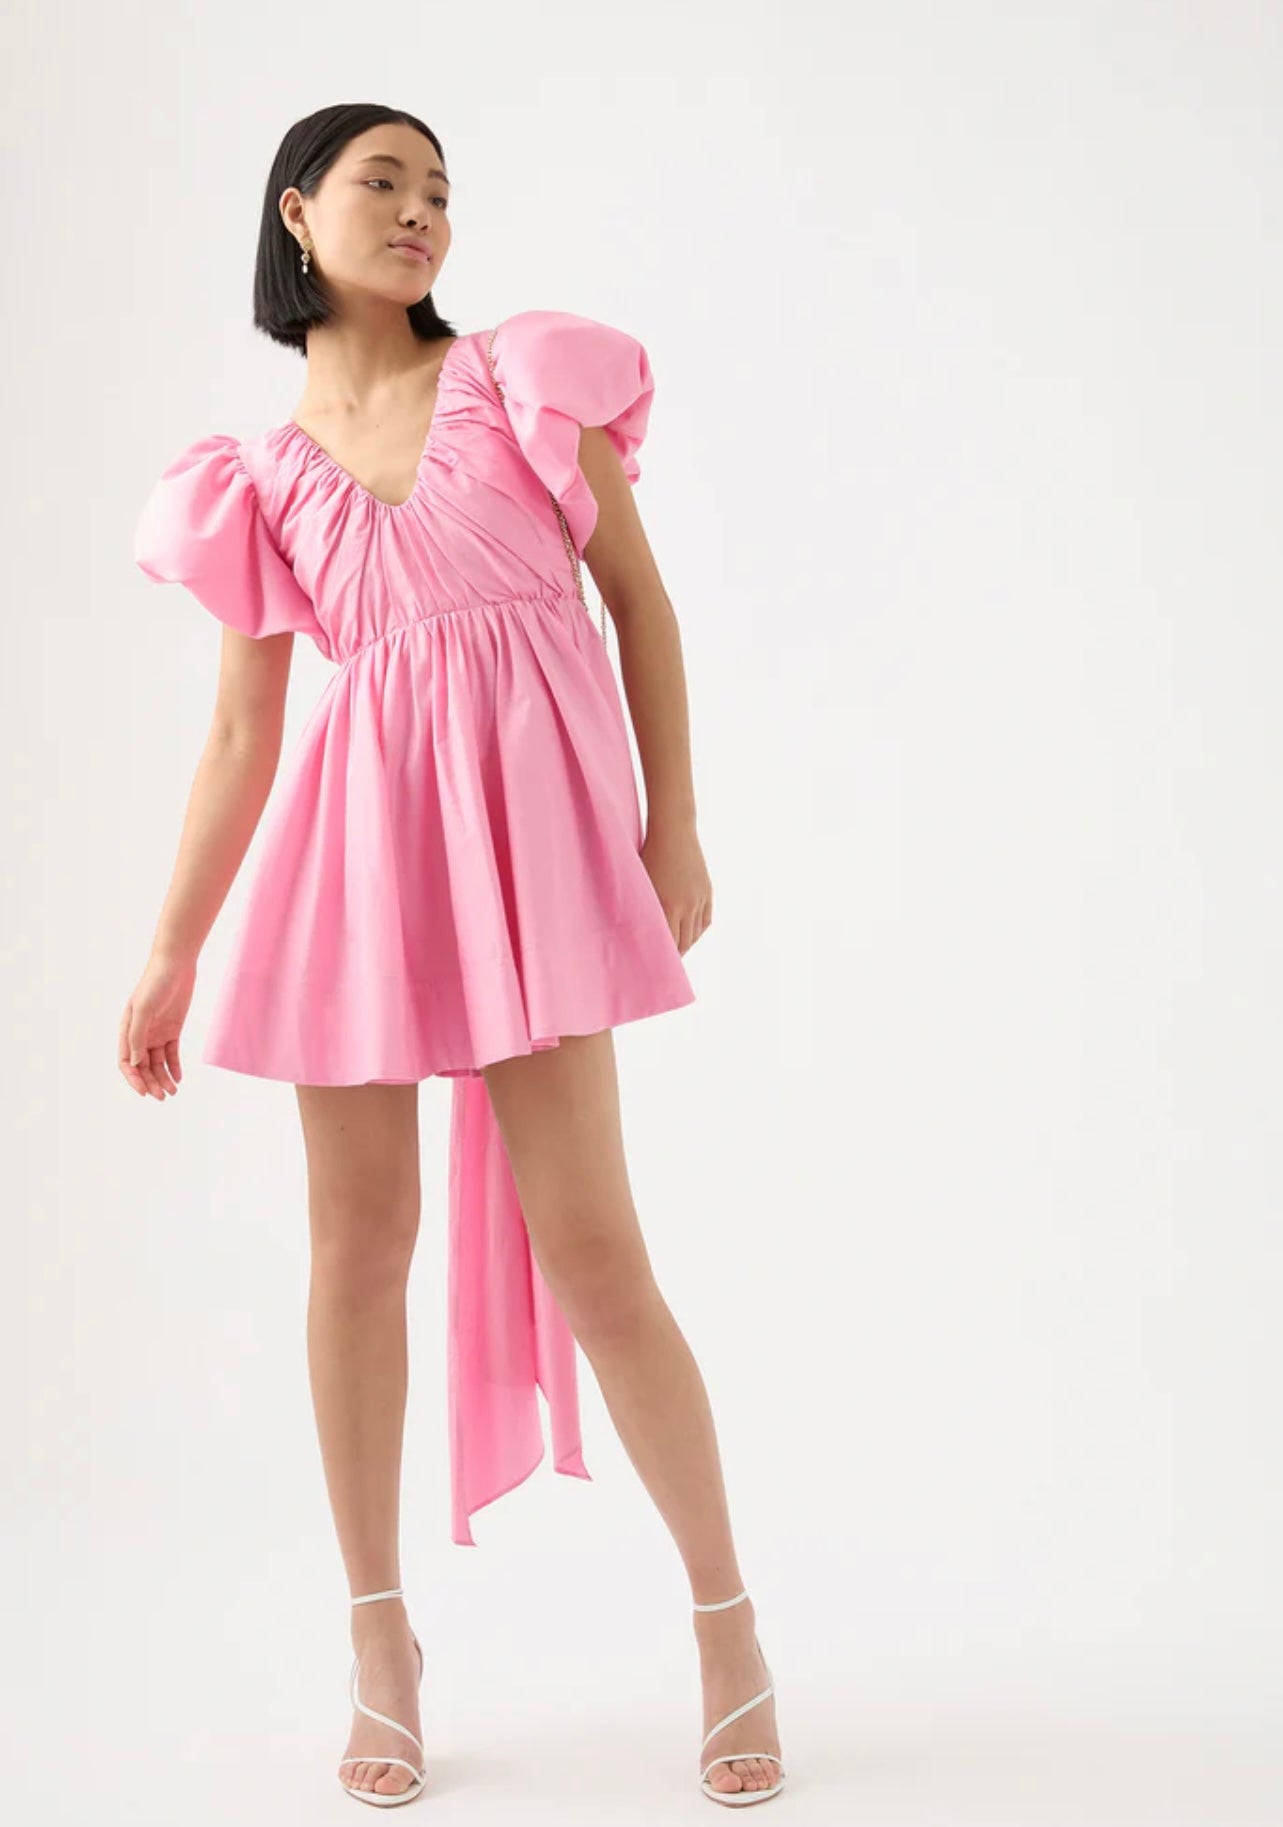 Gretta Bow Back Mini Dress in Ballet Pink